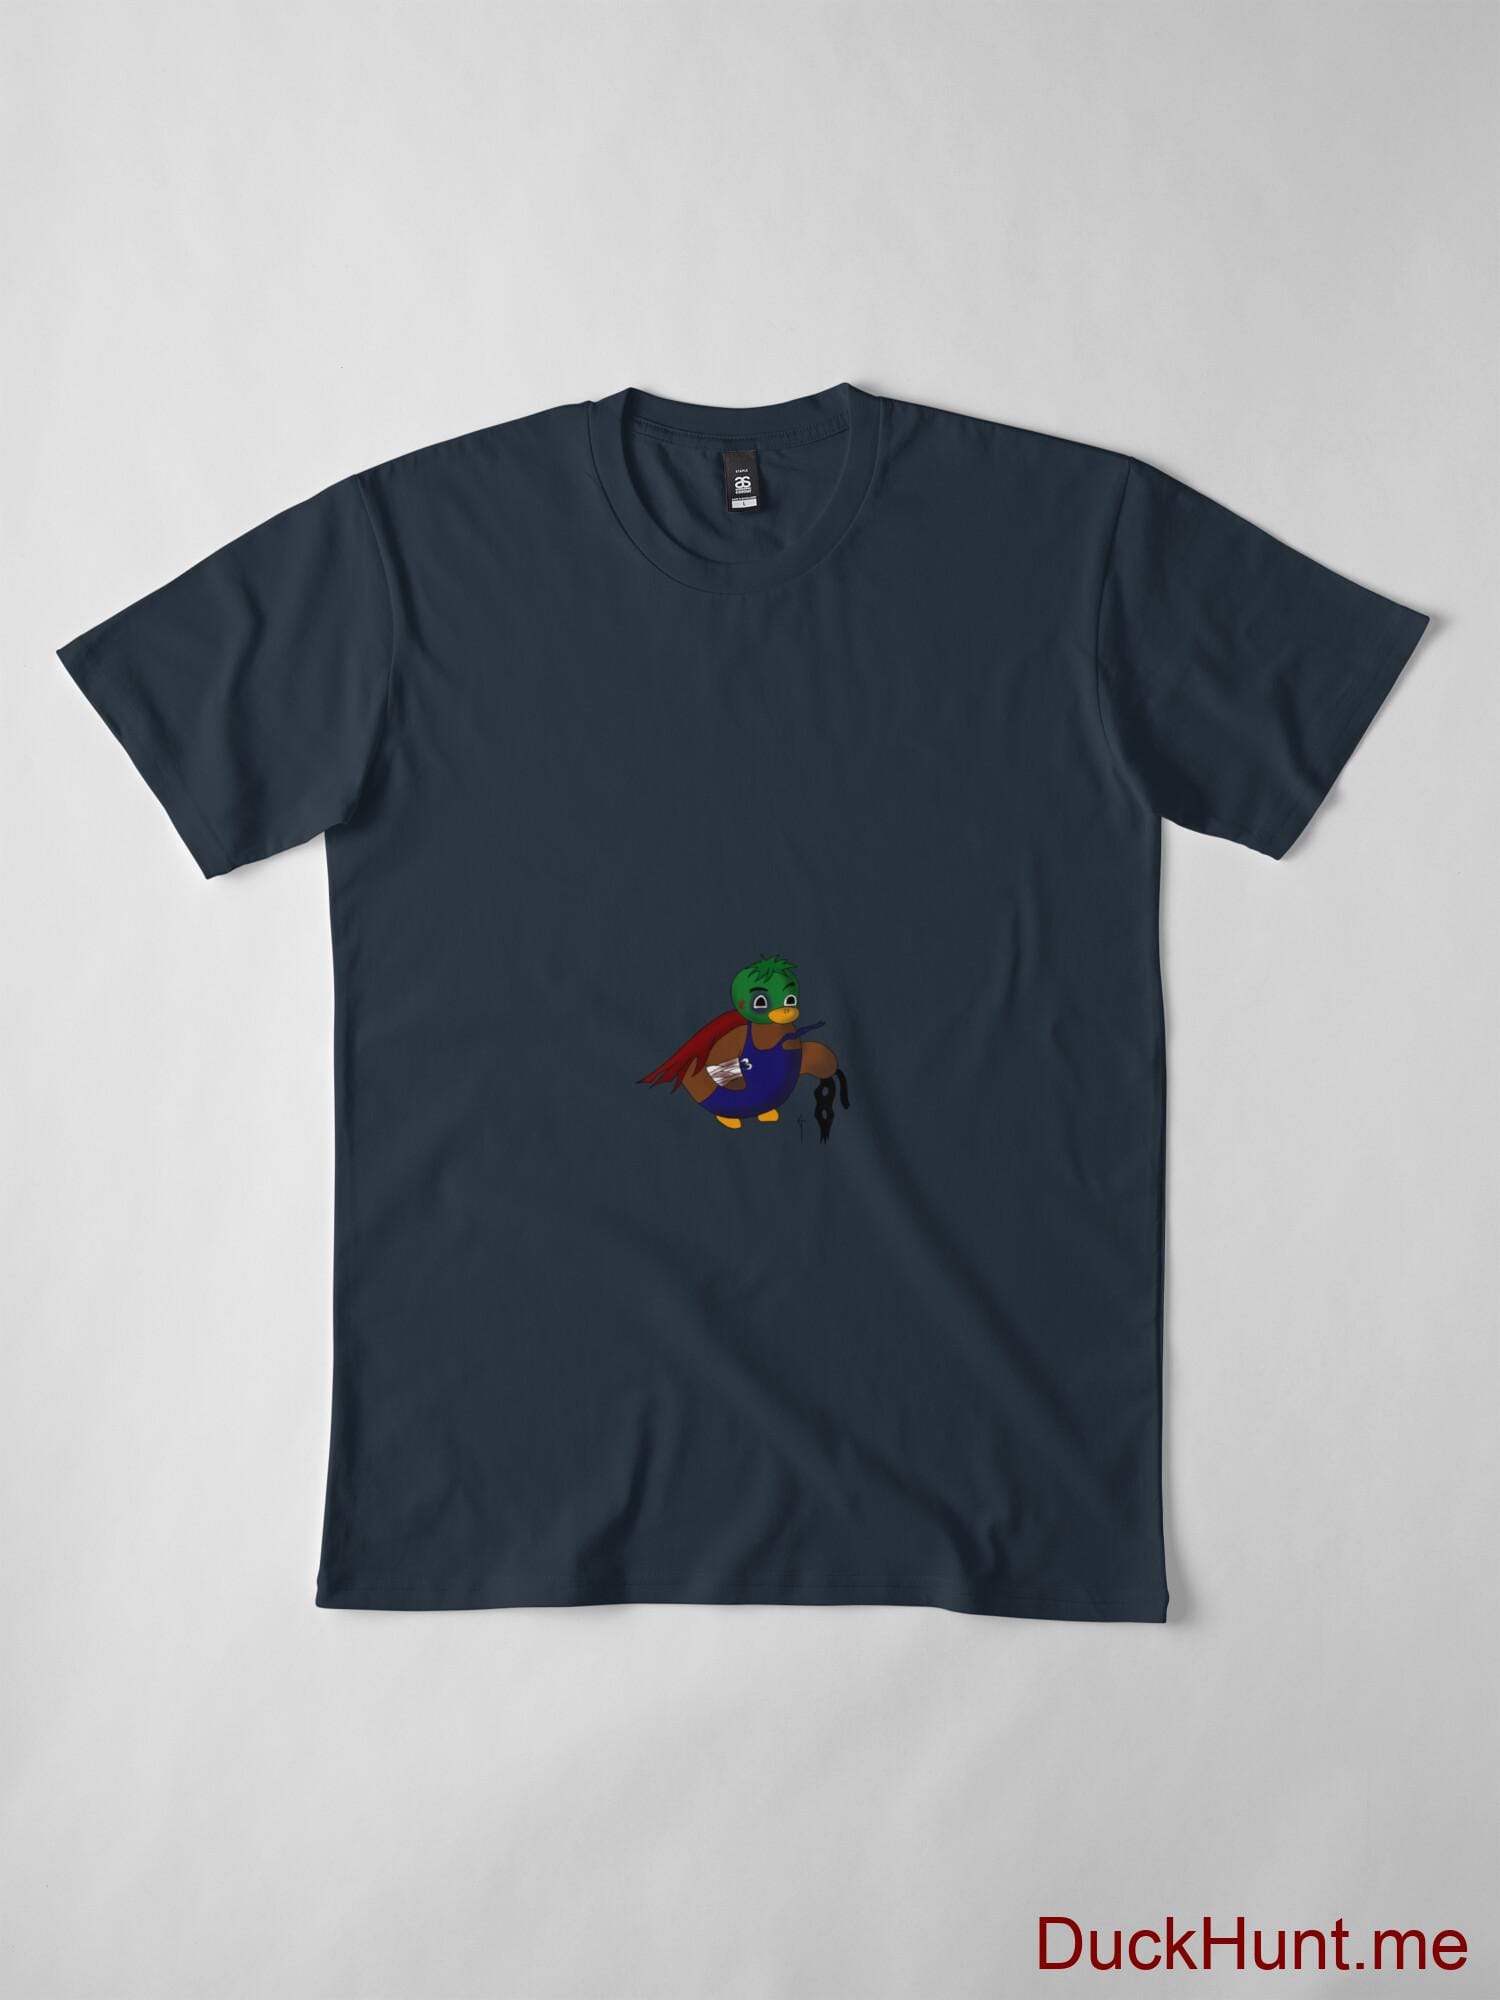 Dead DuckHunt Boss (smokeless) Navy Premium T-Shirt (Front printed) alternative image 3